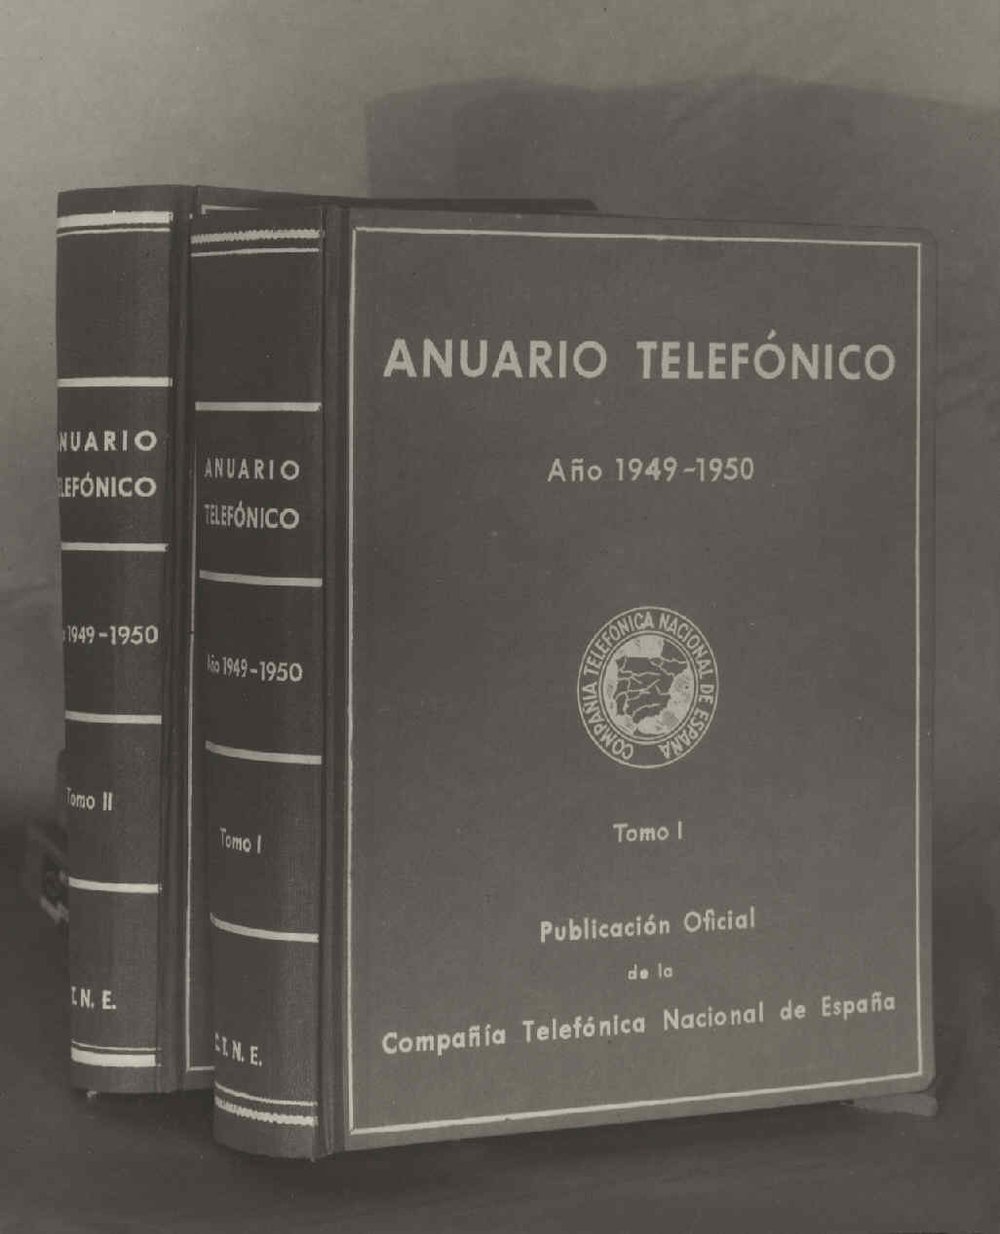 Telephone directory.